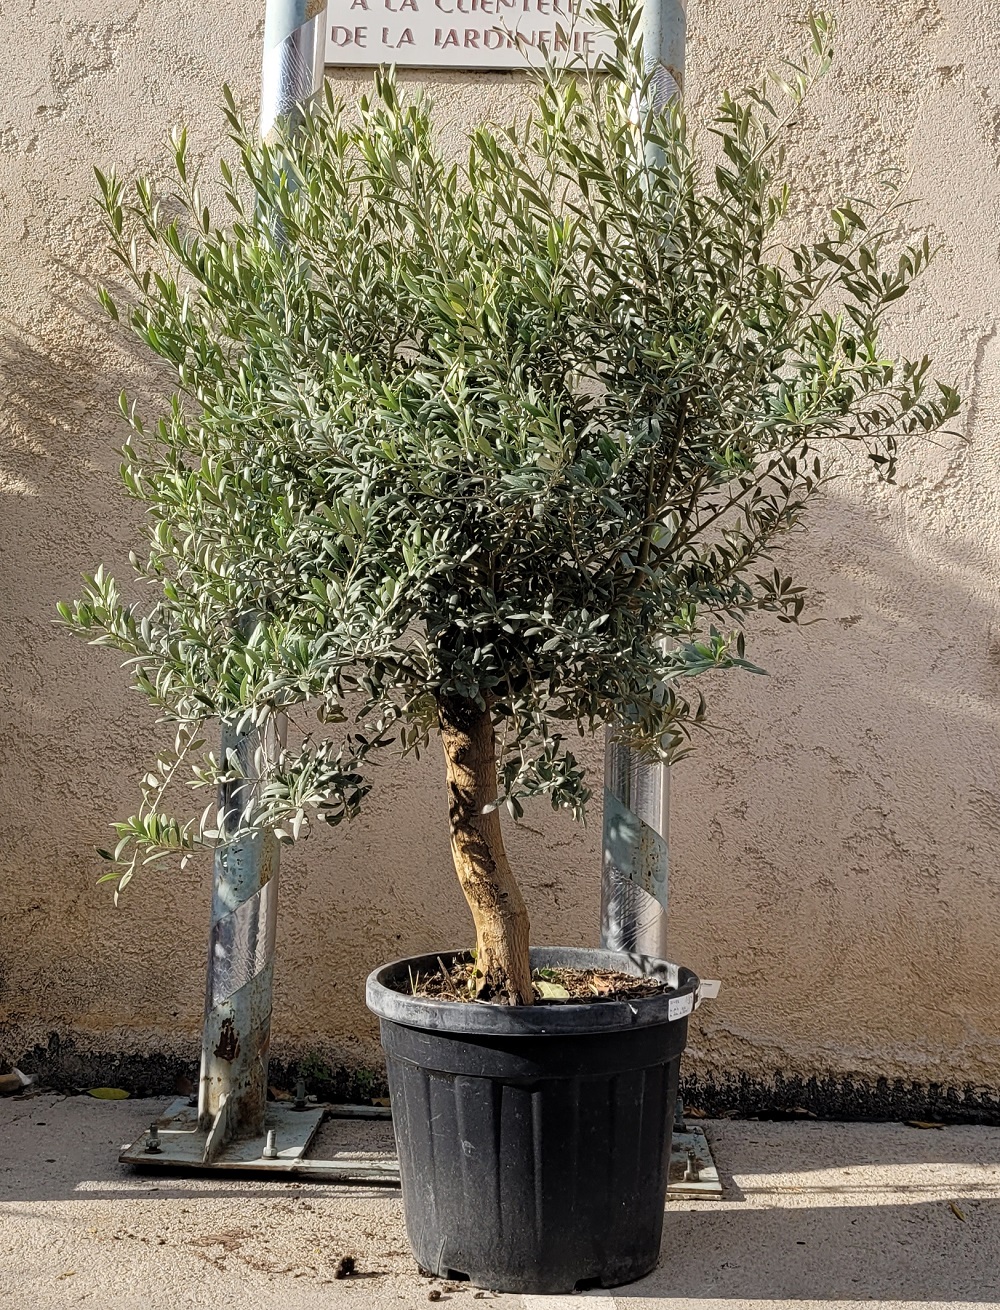 olivier olea europaea - La jardinerie de pessicart nice - Livraison a domicile nice 06 plantes vertes terres terreaux jardinage arbres cactus (2)